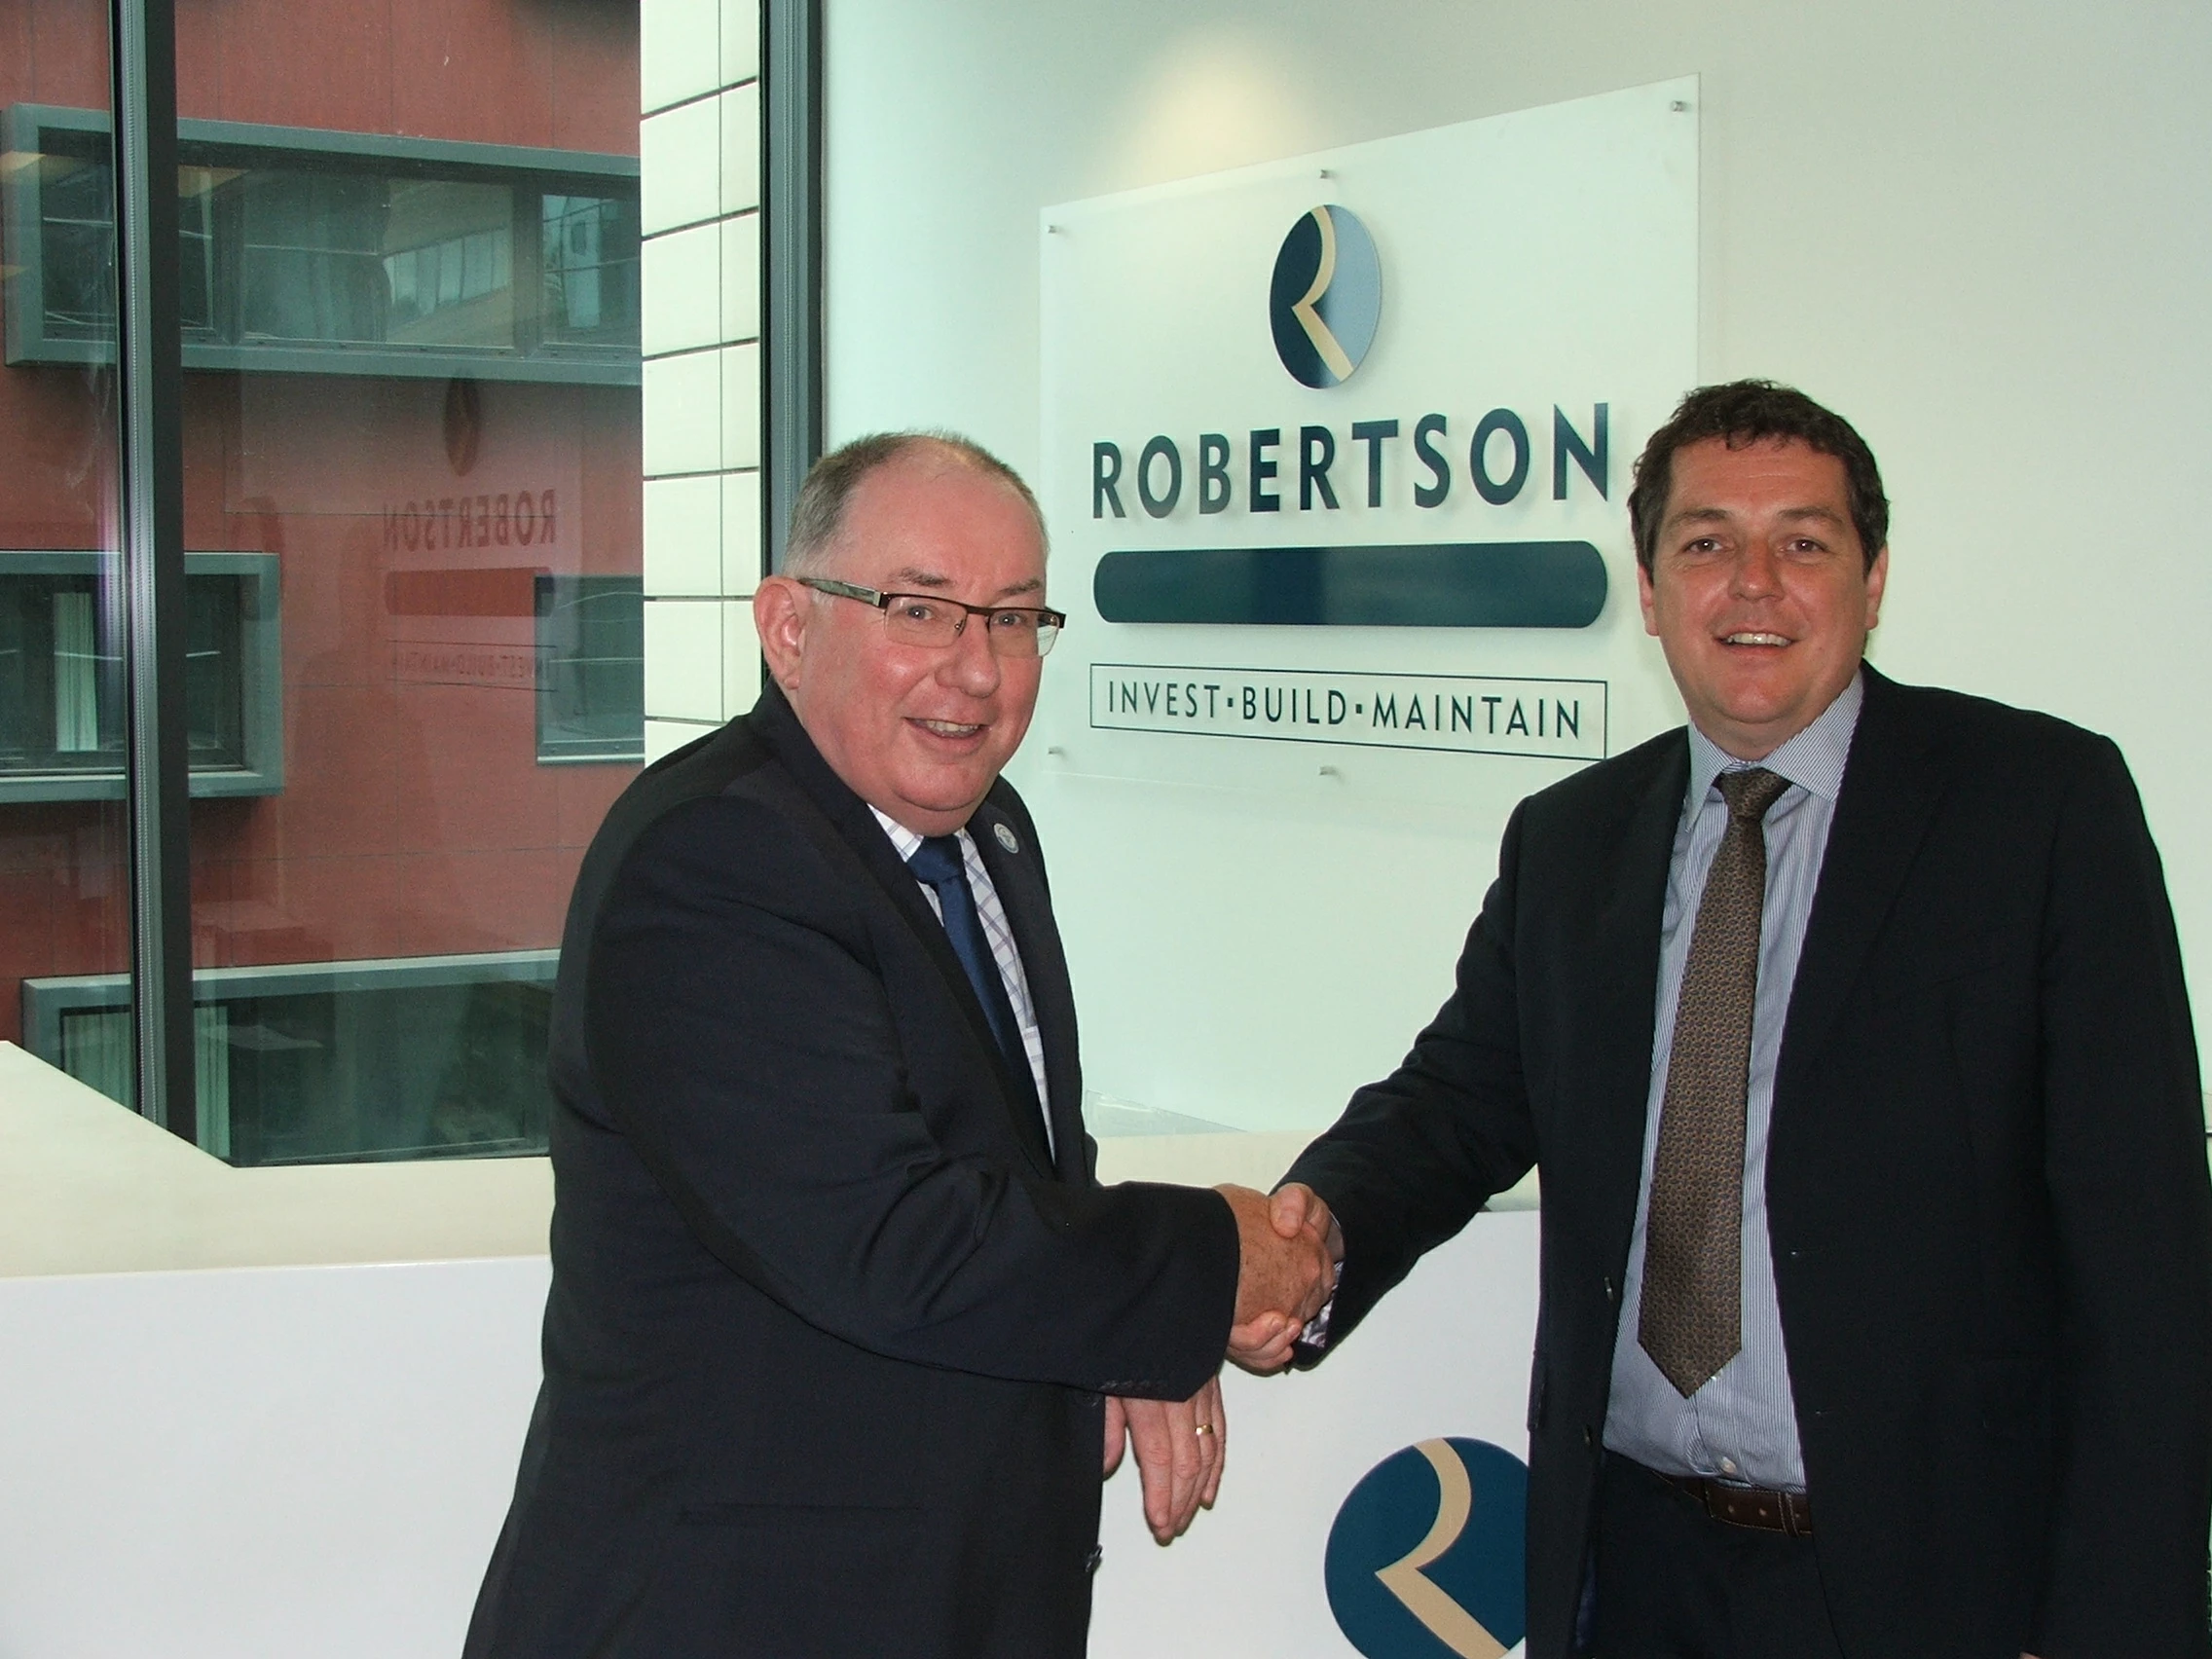 Garry Hope, Managing Director of Robertson North East (left) and Wayne Denham, Operations Manager of Robertson North East (right)